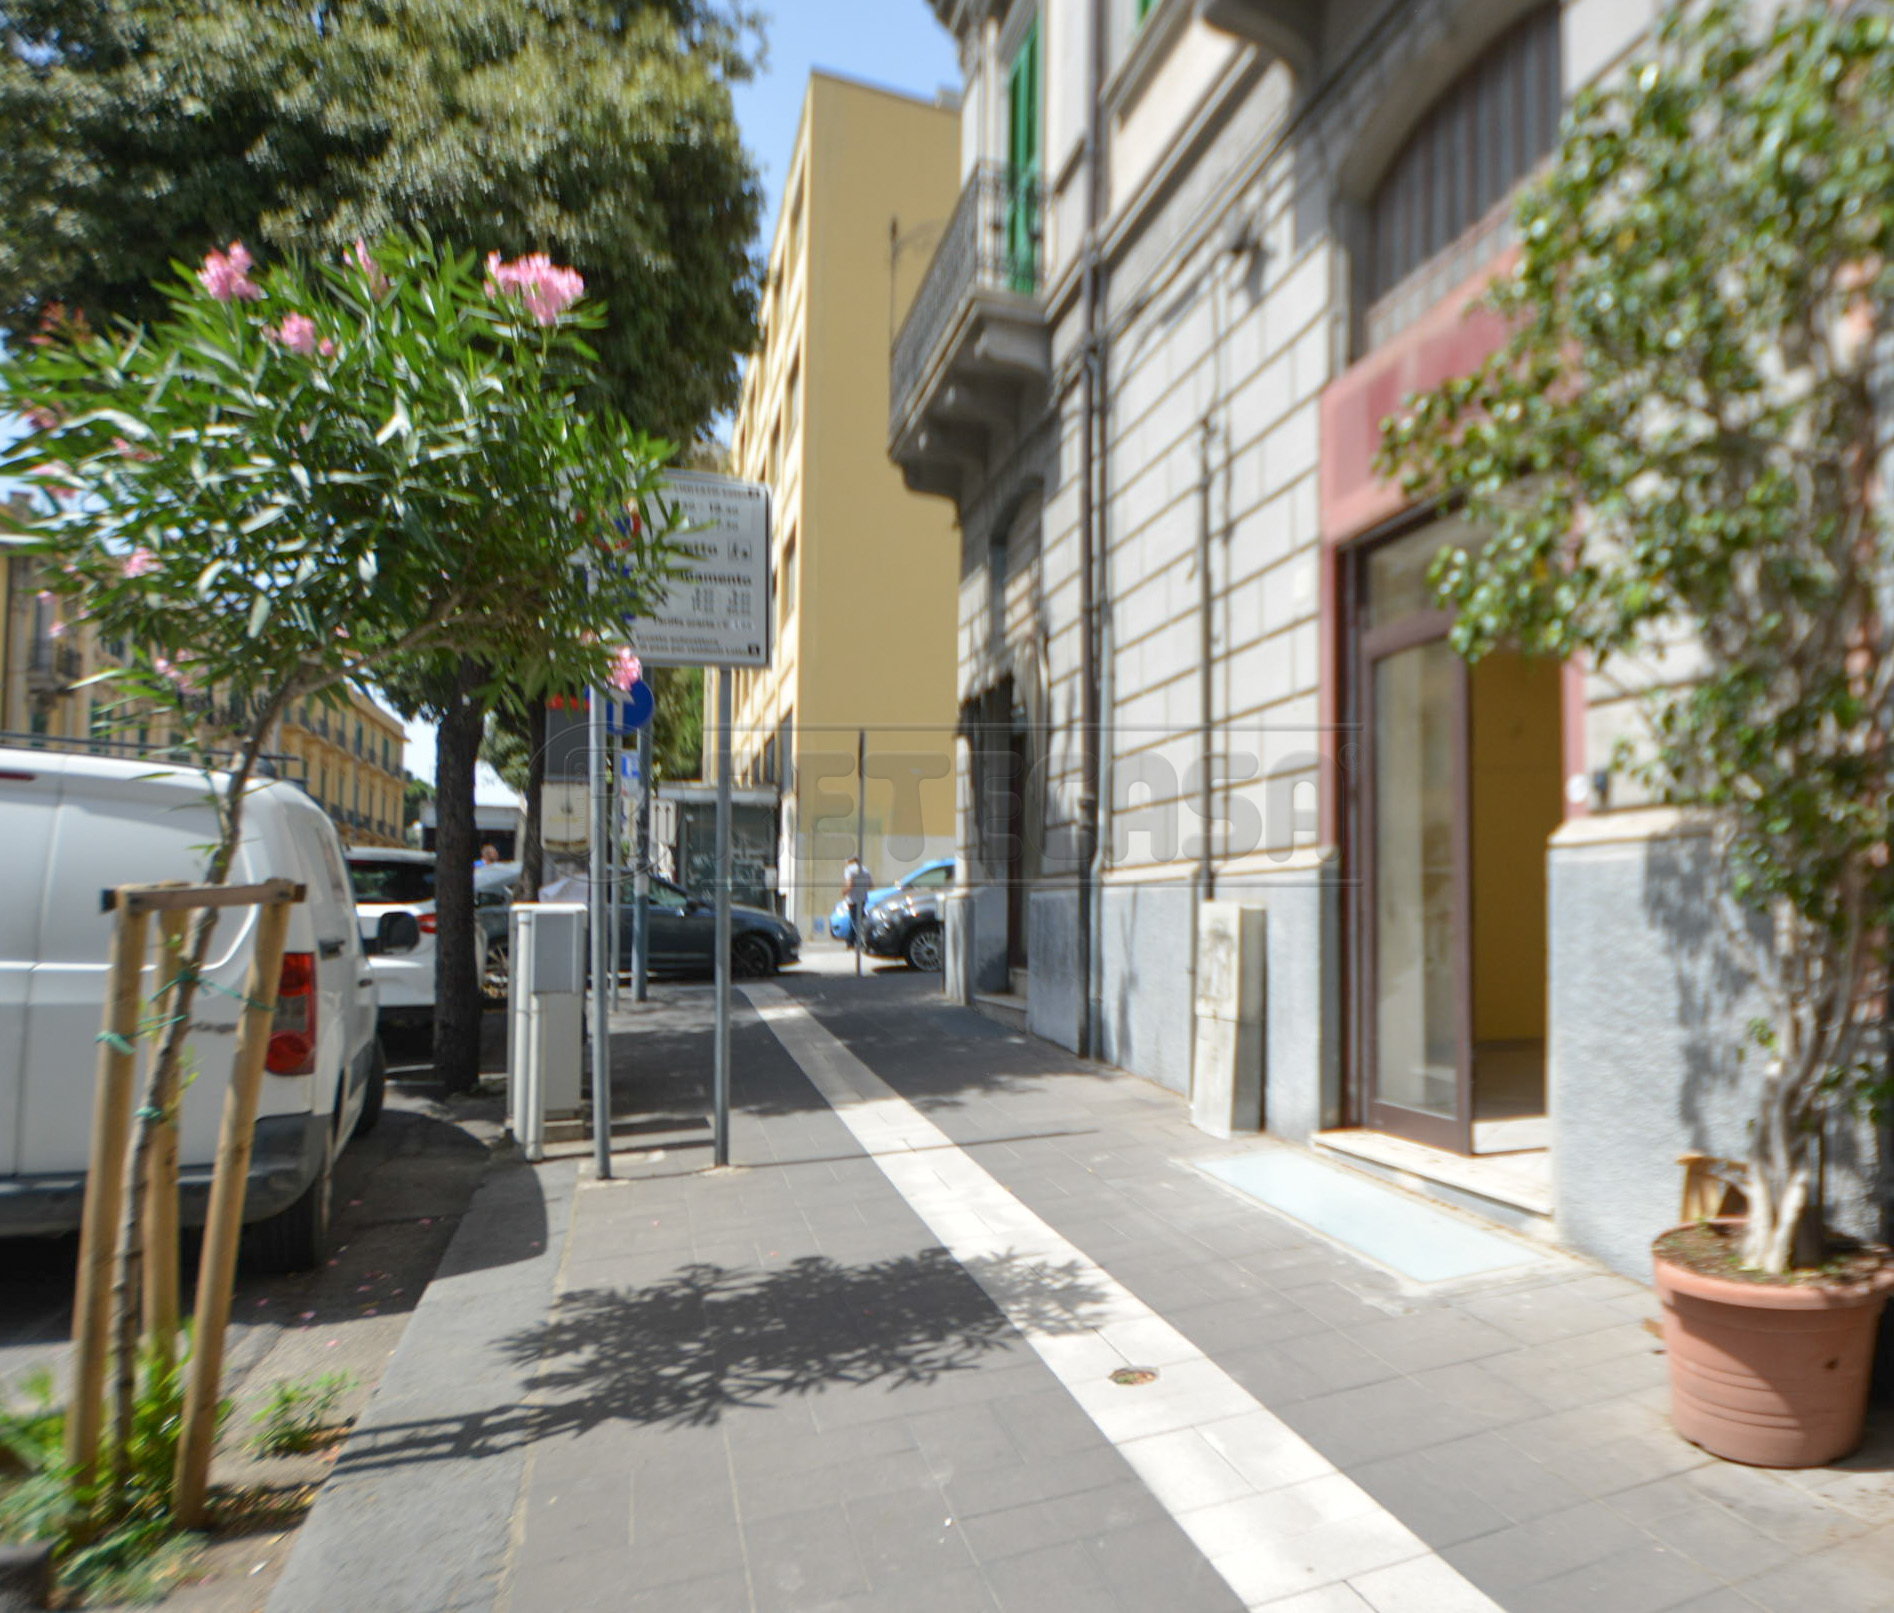 Locale commerciale in affitto in corso cavour 3, Messina